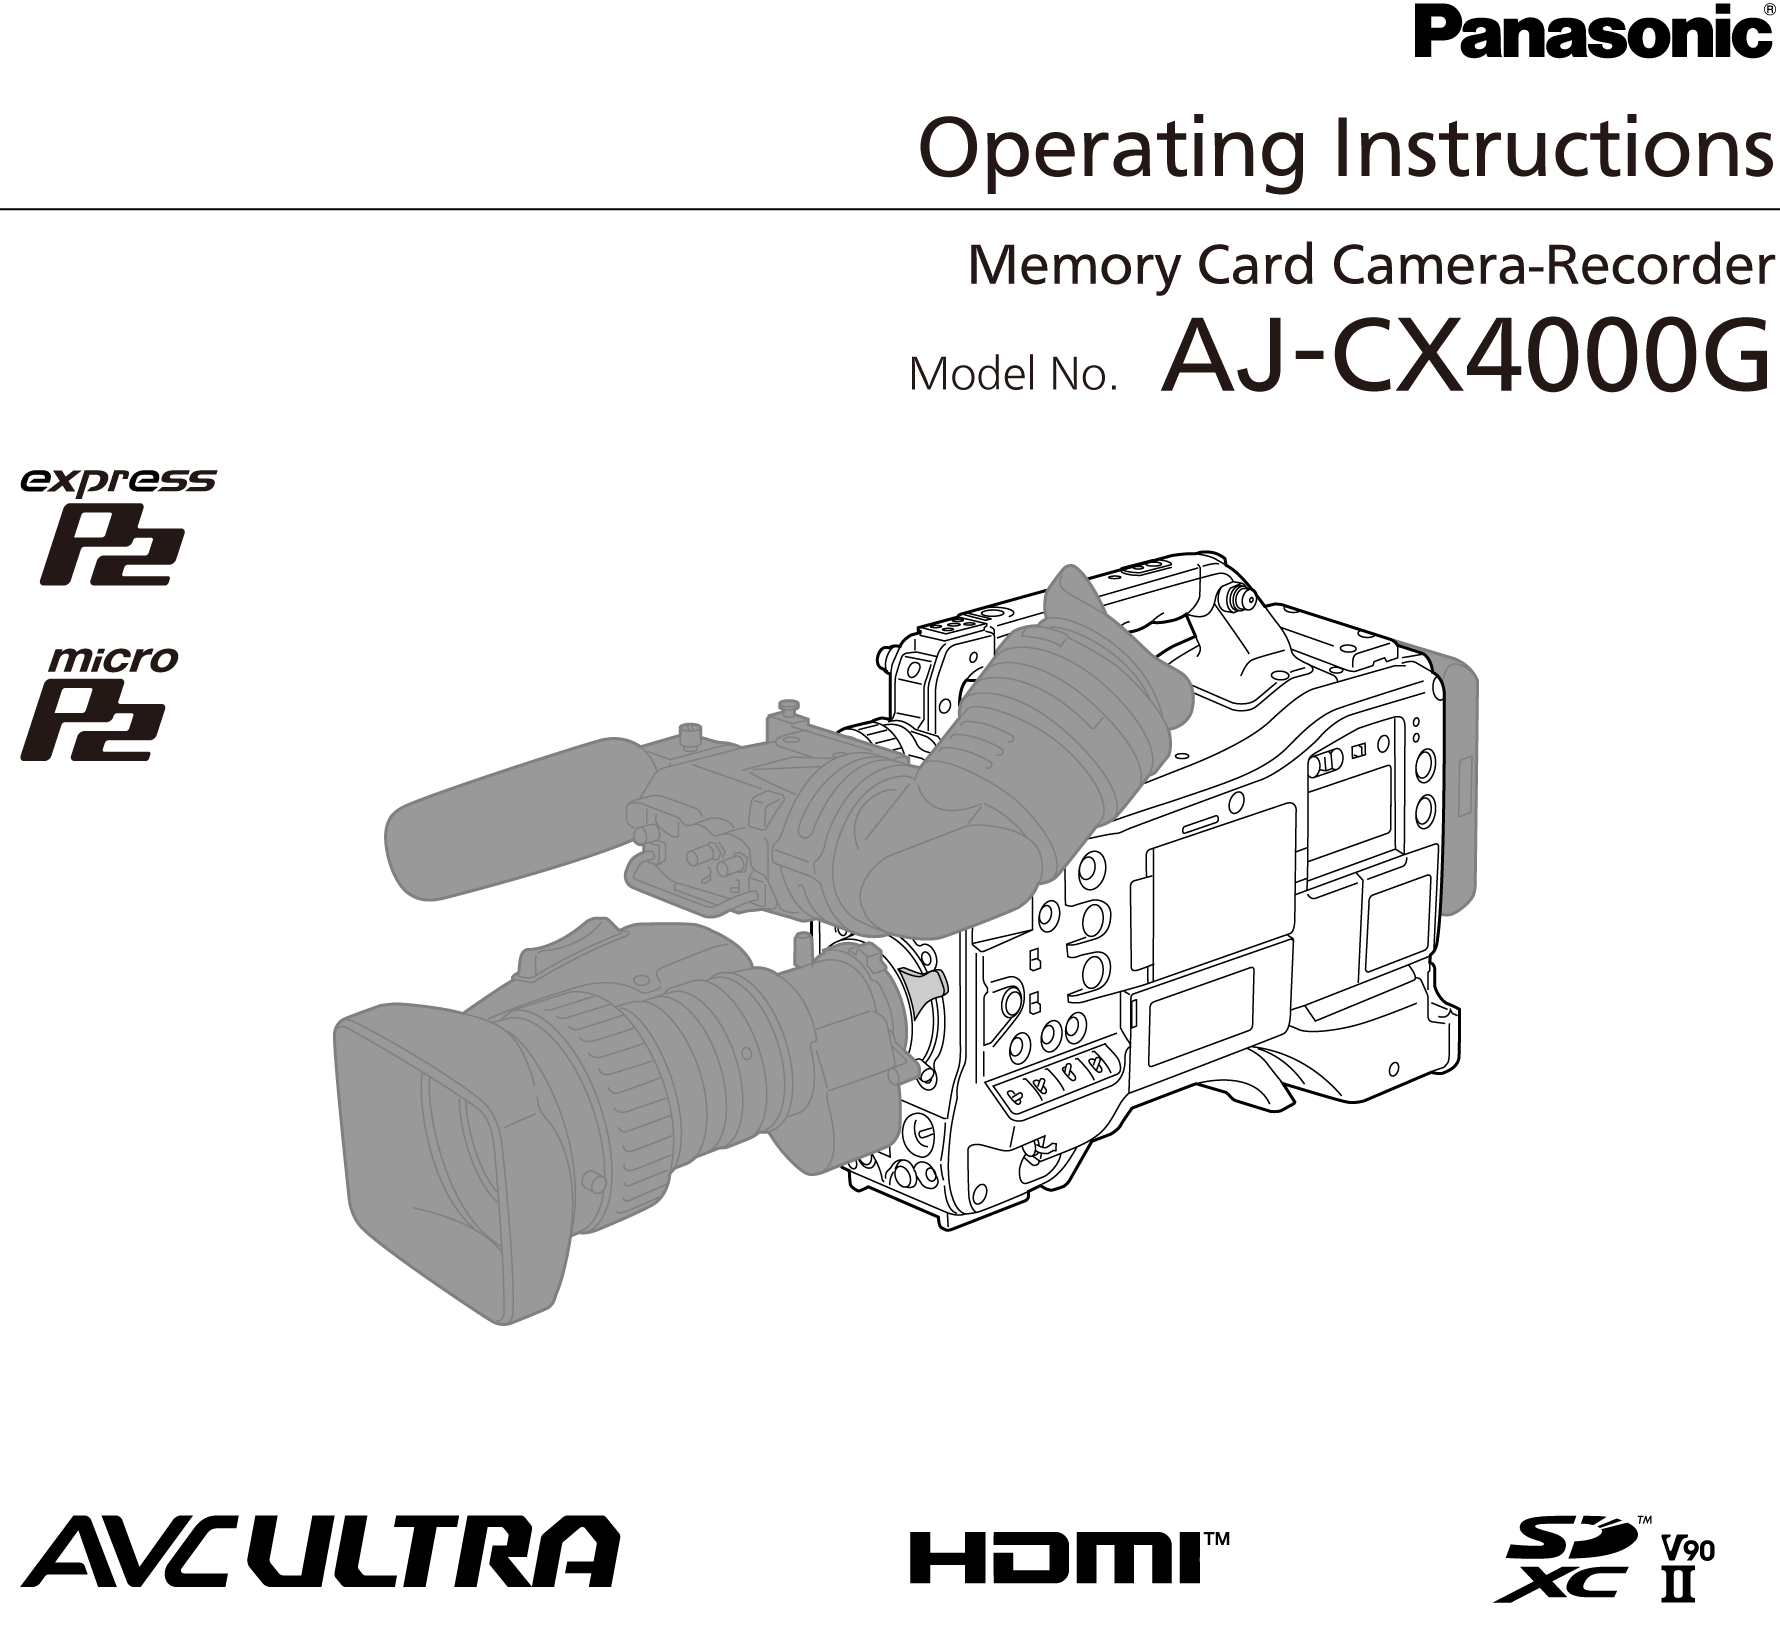 Operating Instructions AJ-CX4000G